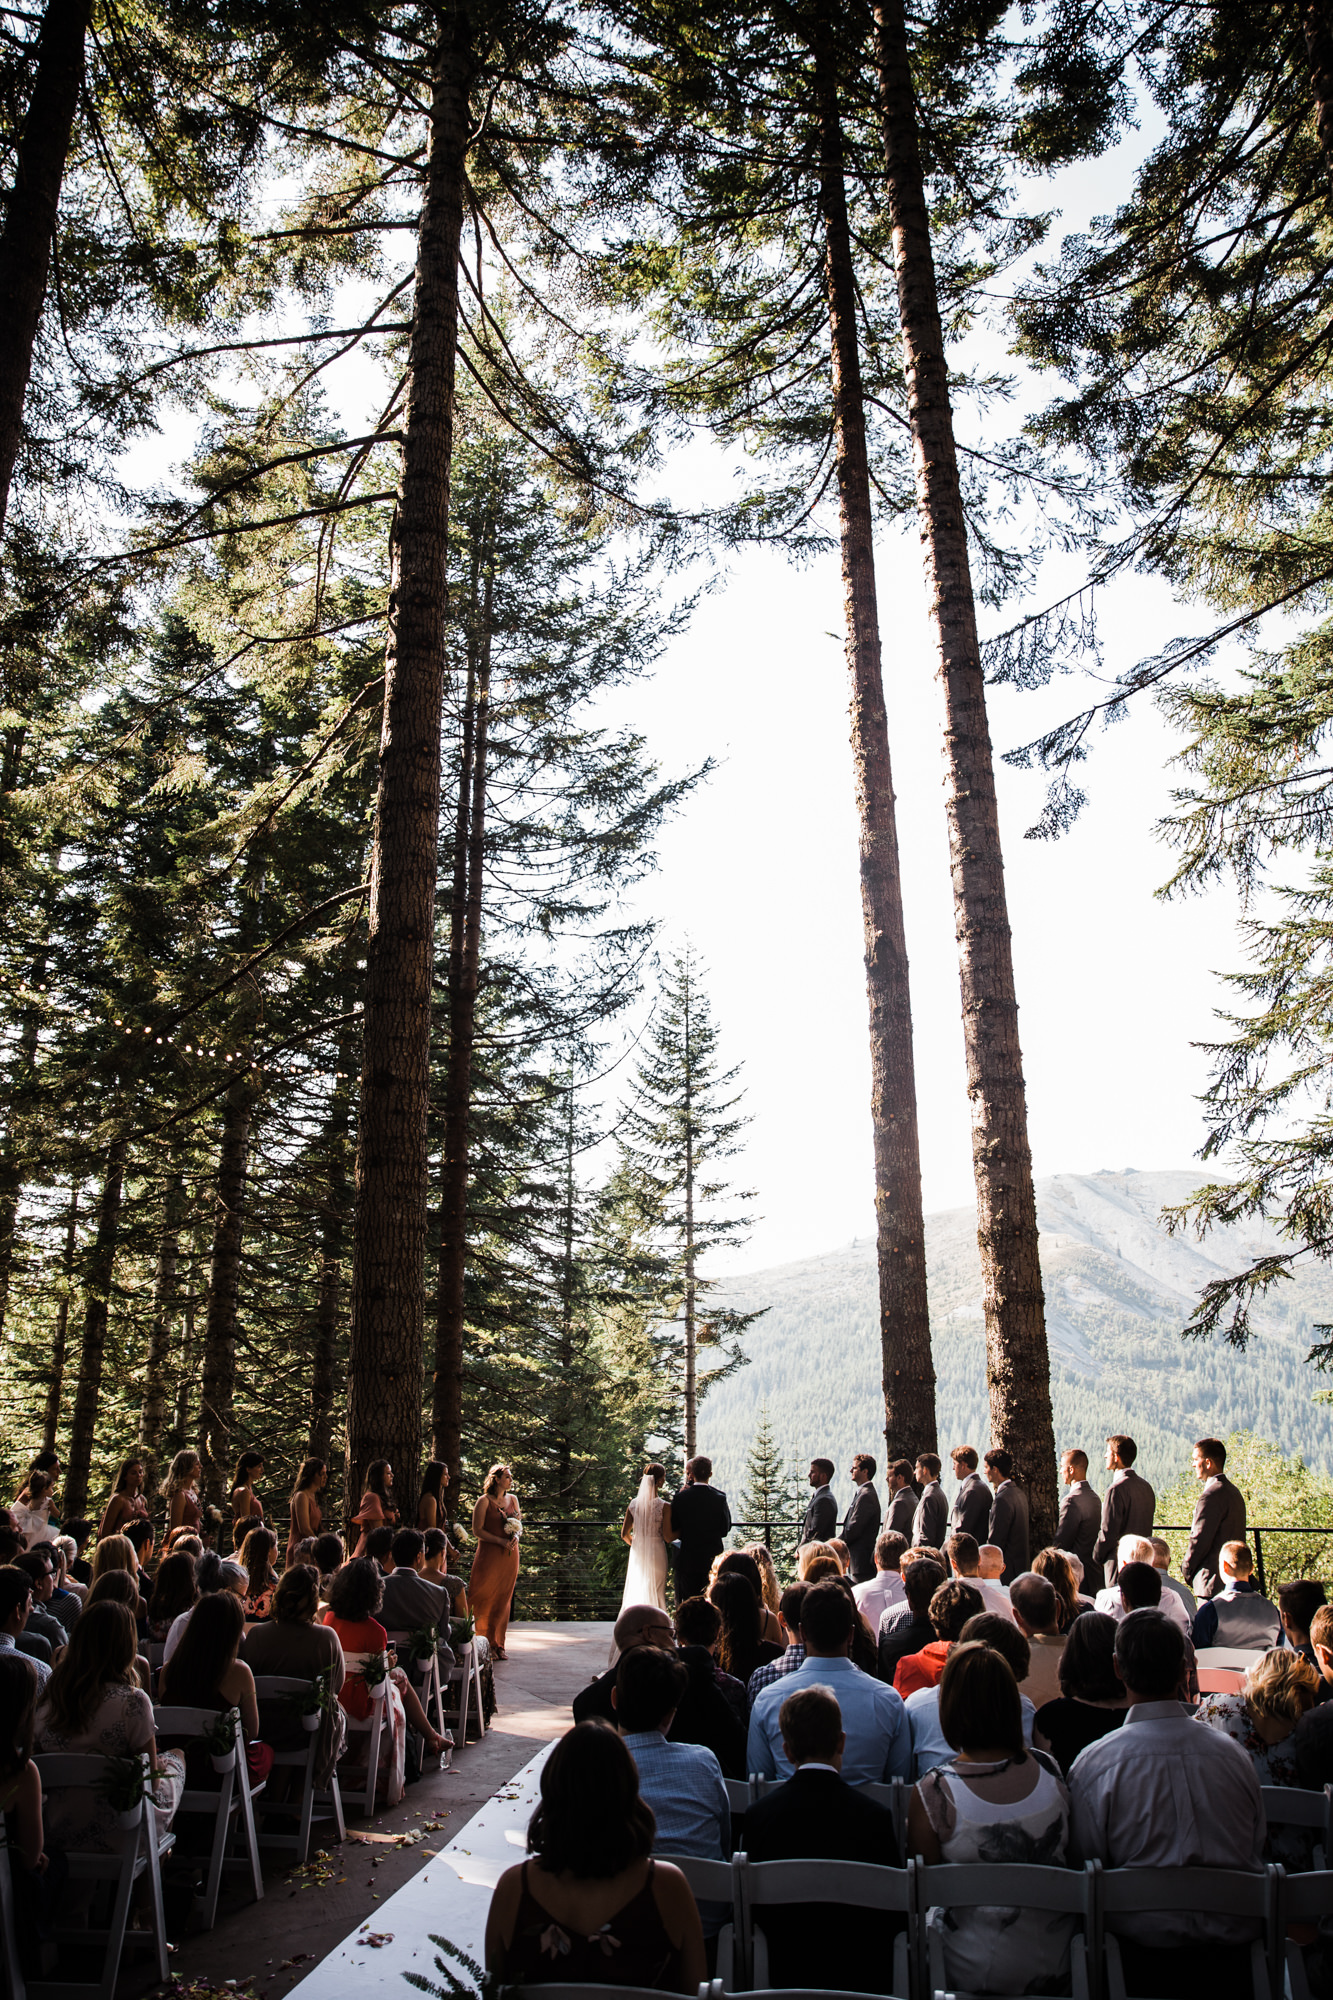 jena + kyler's treehouse wedding | outdoor reception under the stars | washington adventure wedding photographer | the hearnes adventure wedding photography | www.thehearnes.com